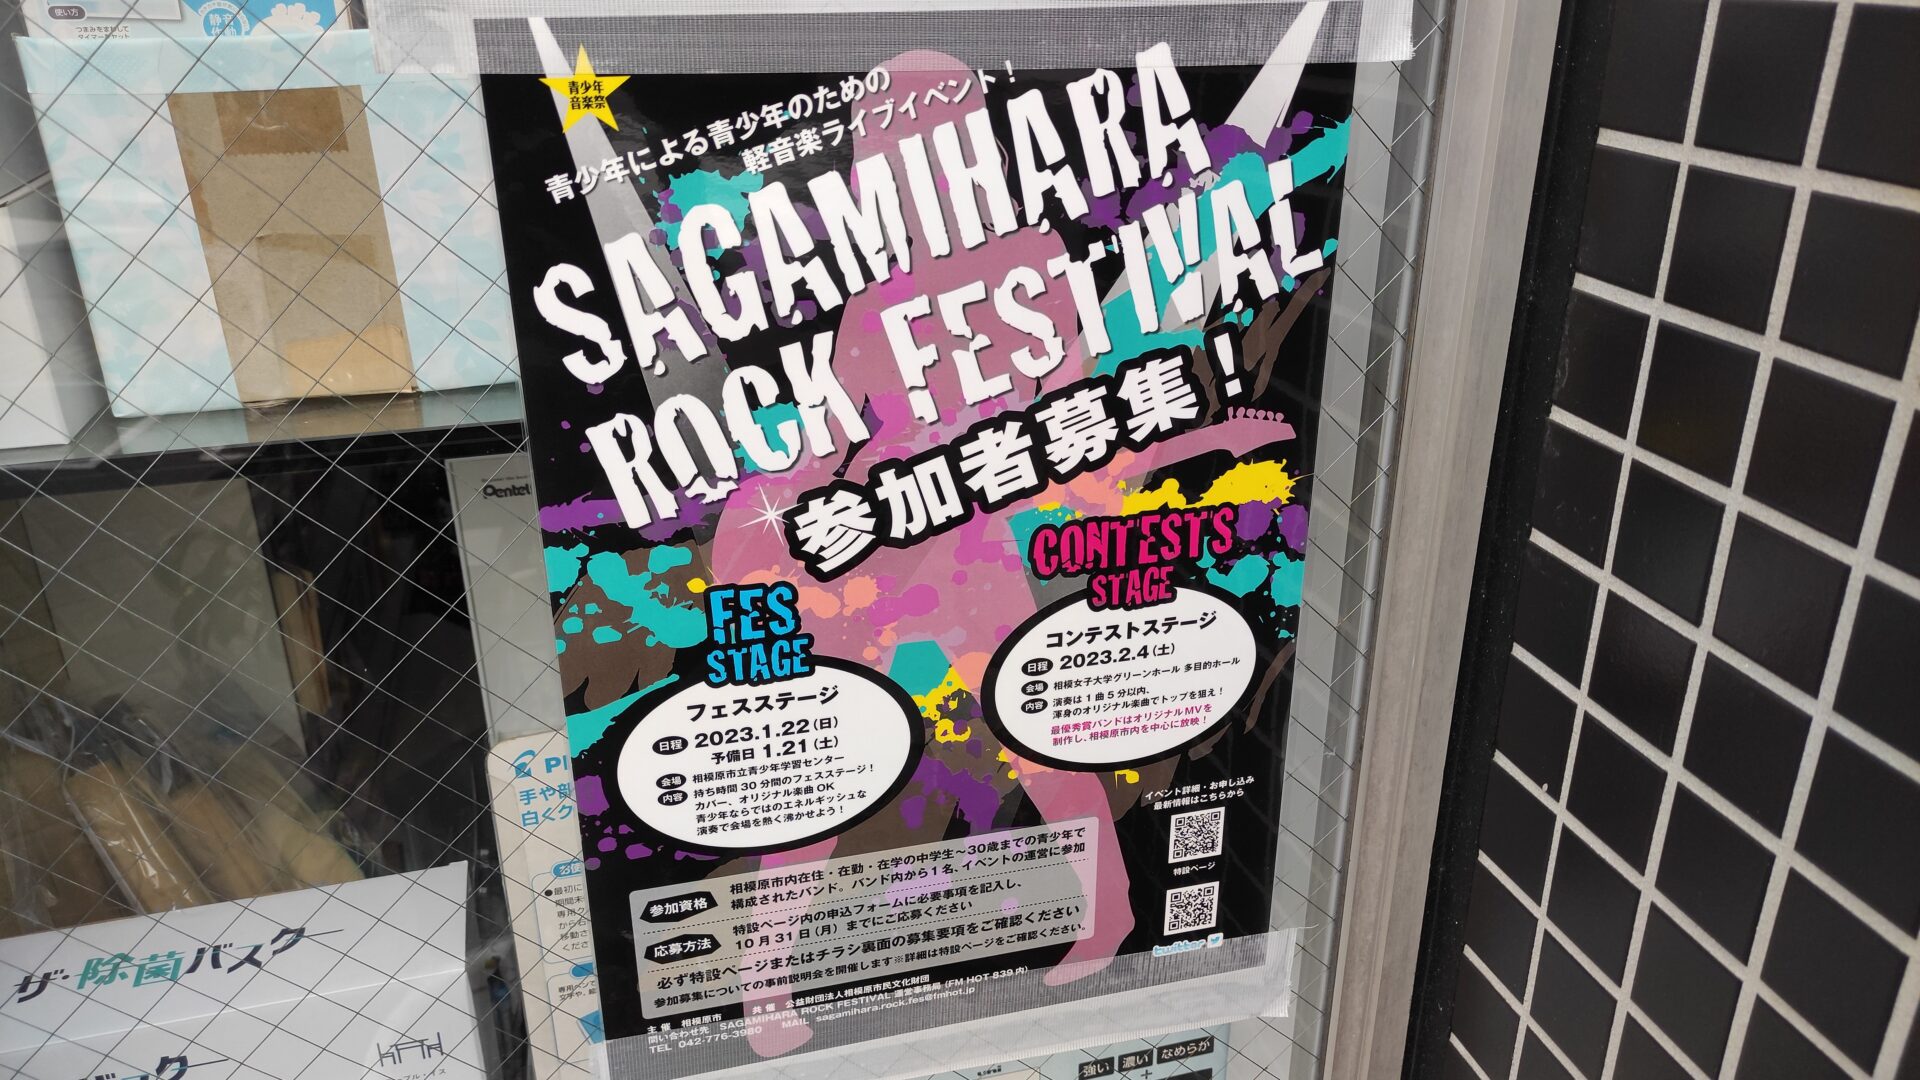 ”SAGAMIHARA ROCK FESTIVAL”、本日 2/4（土）開催です！01